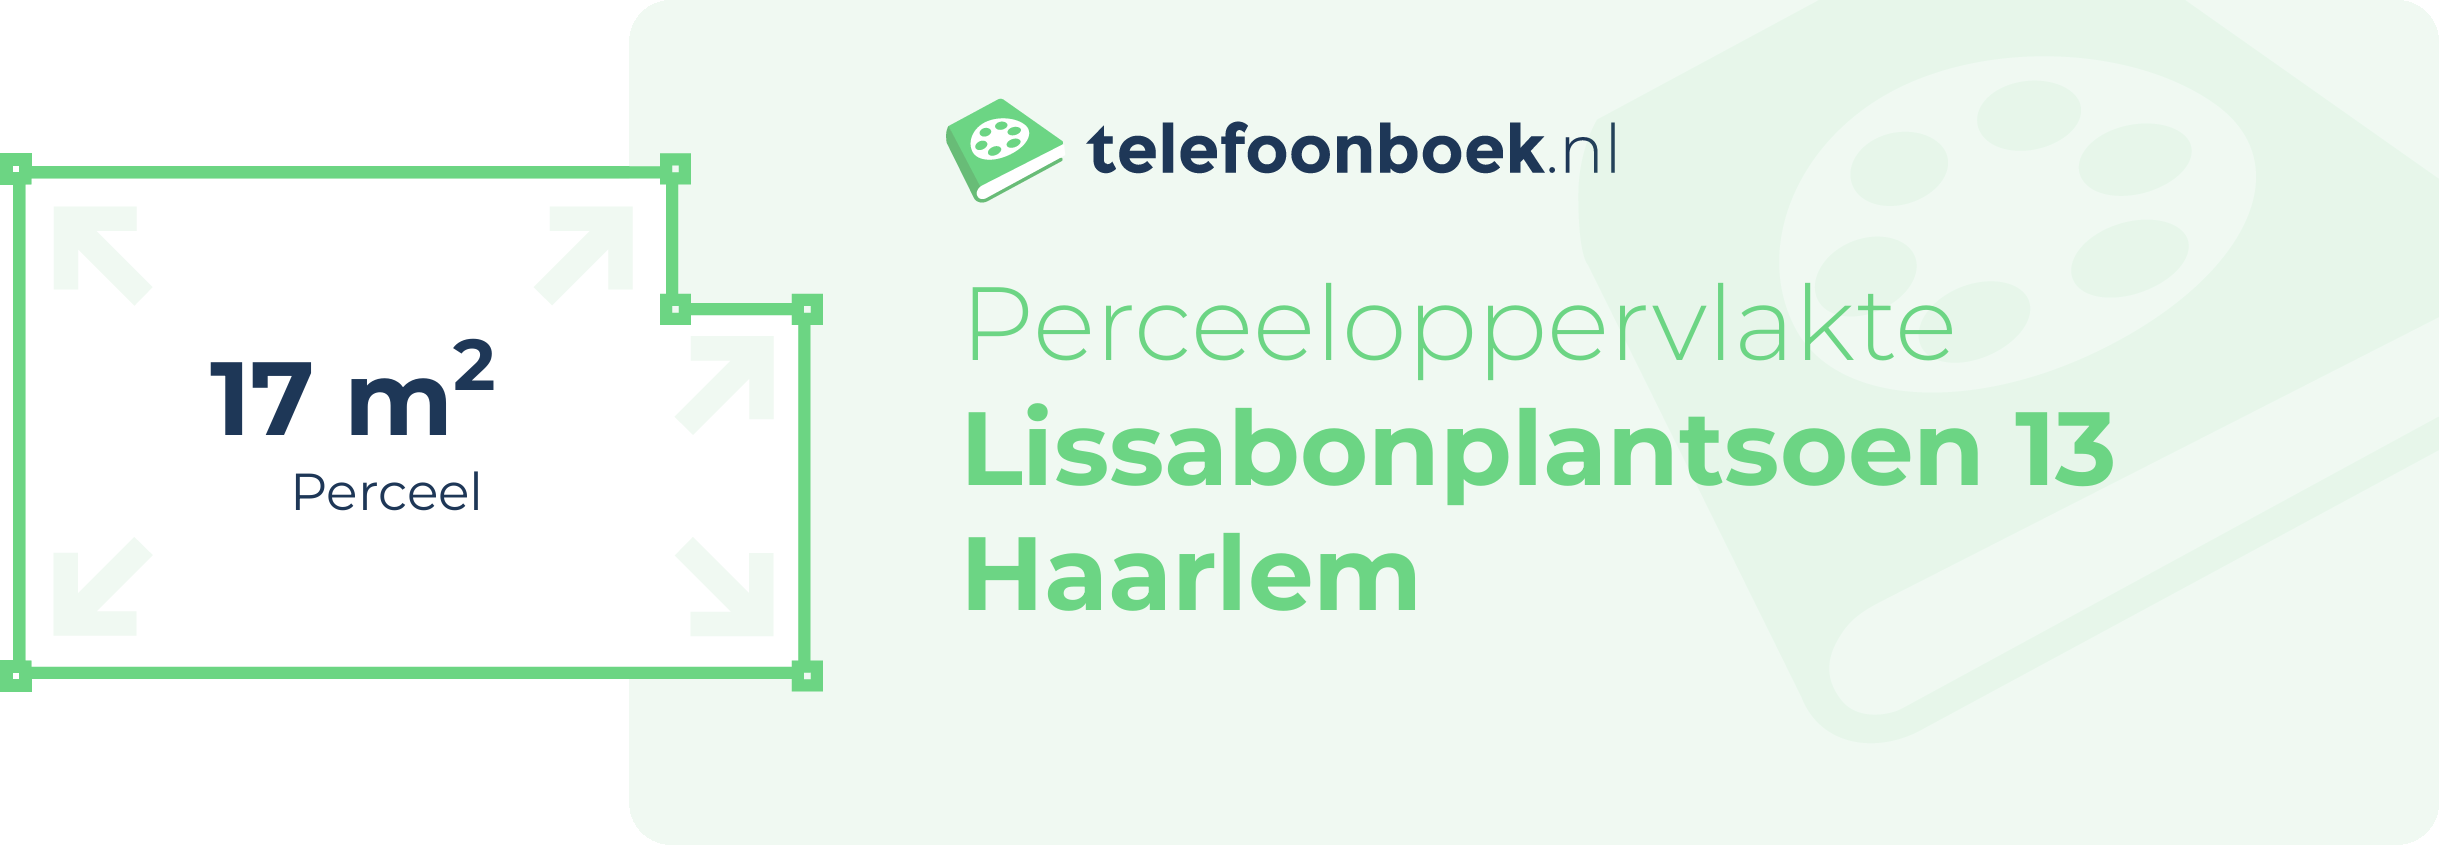 Perceeloppervlakte Lissabonplantsoen 13 Haarlem